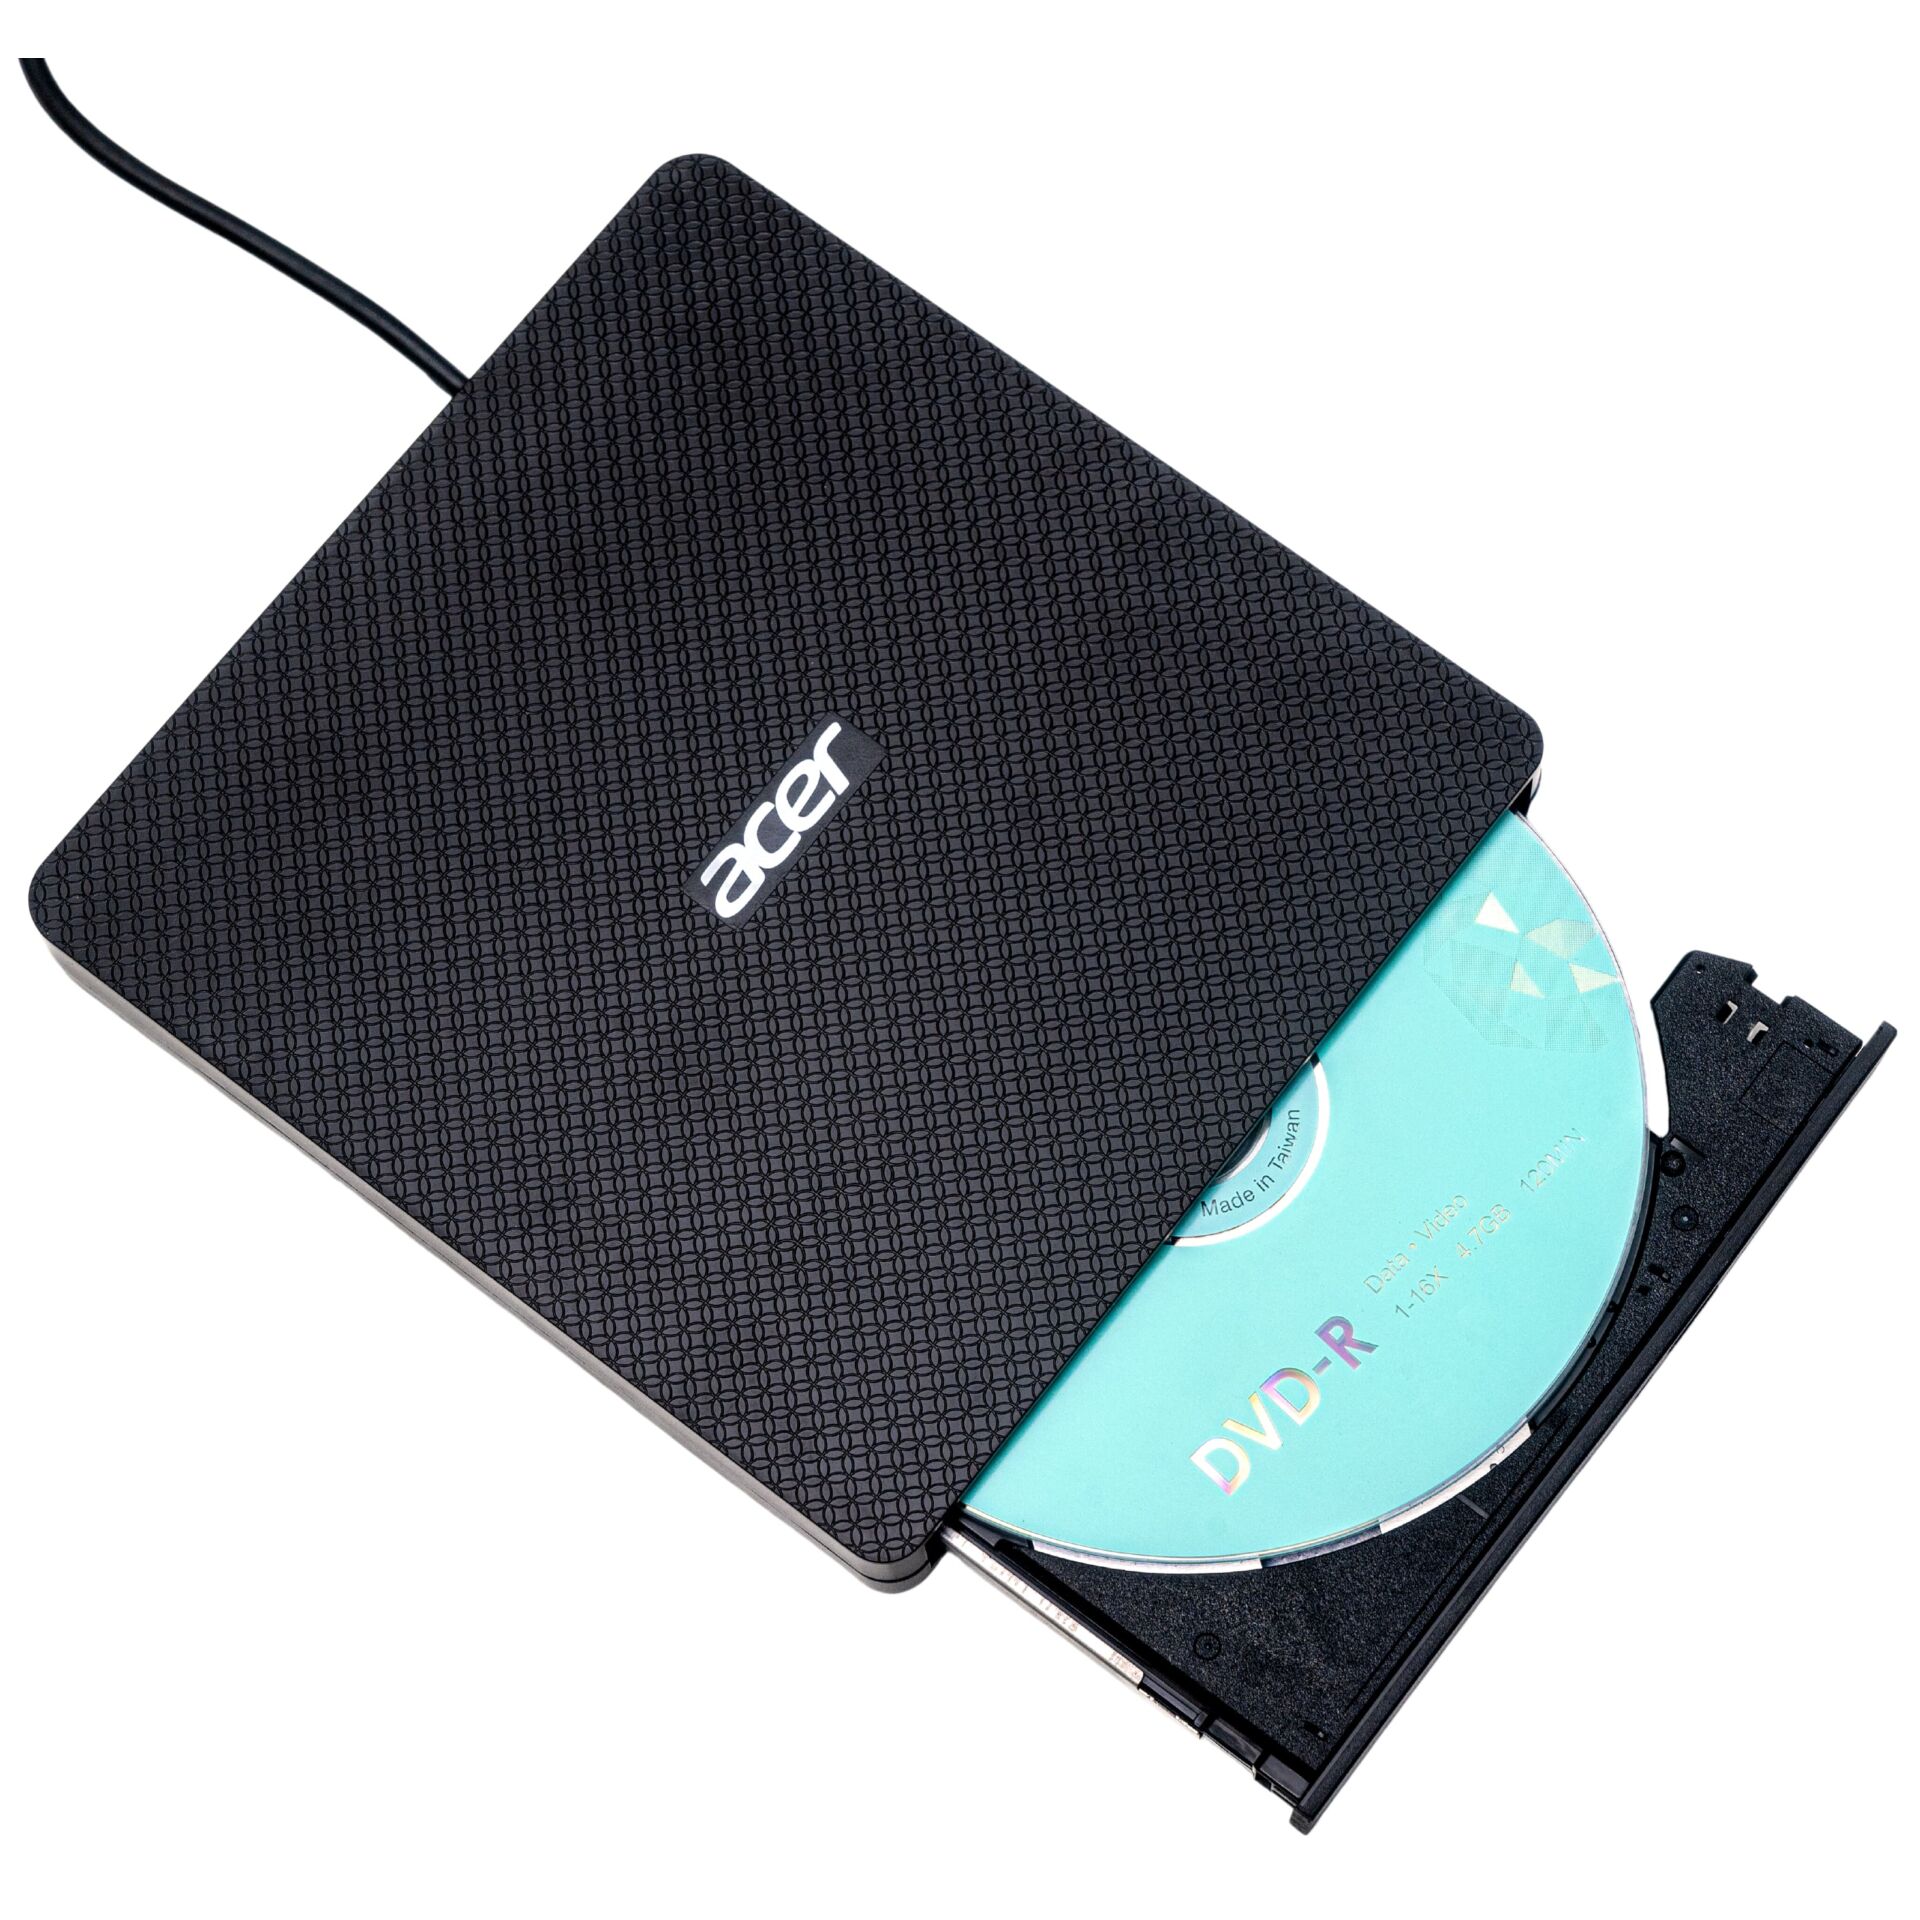 Acer AXD001 DVD-Writer schwarz, USB-A/USB-C 3.0, M-DISC 